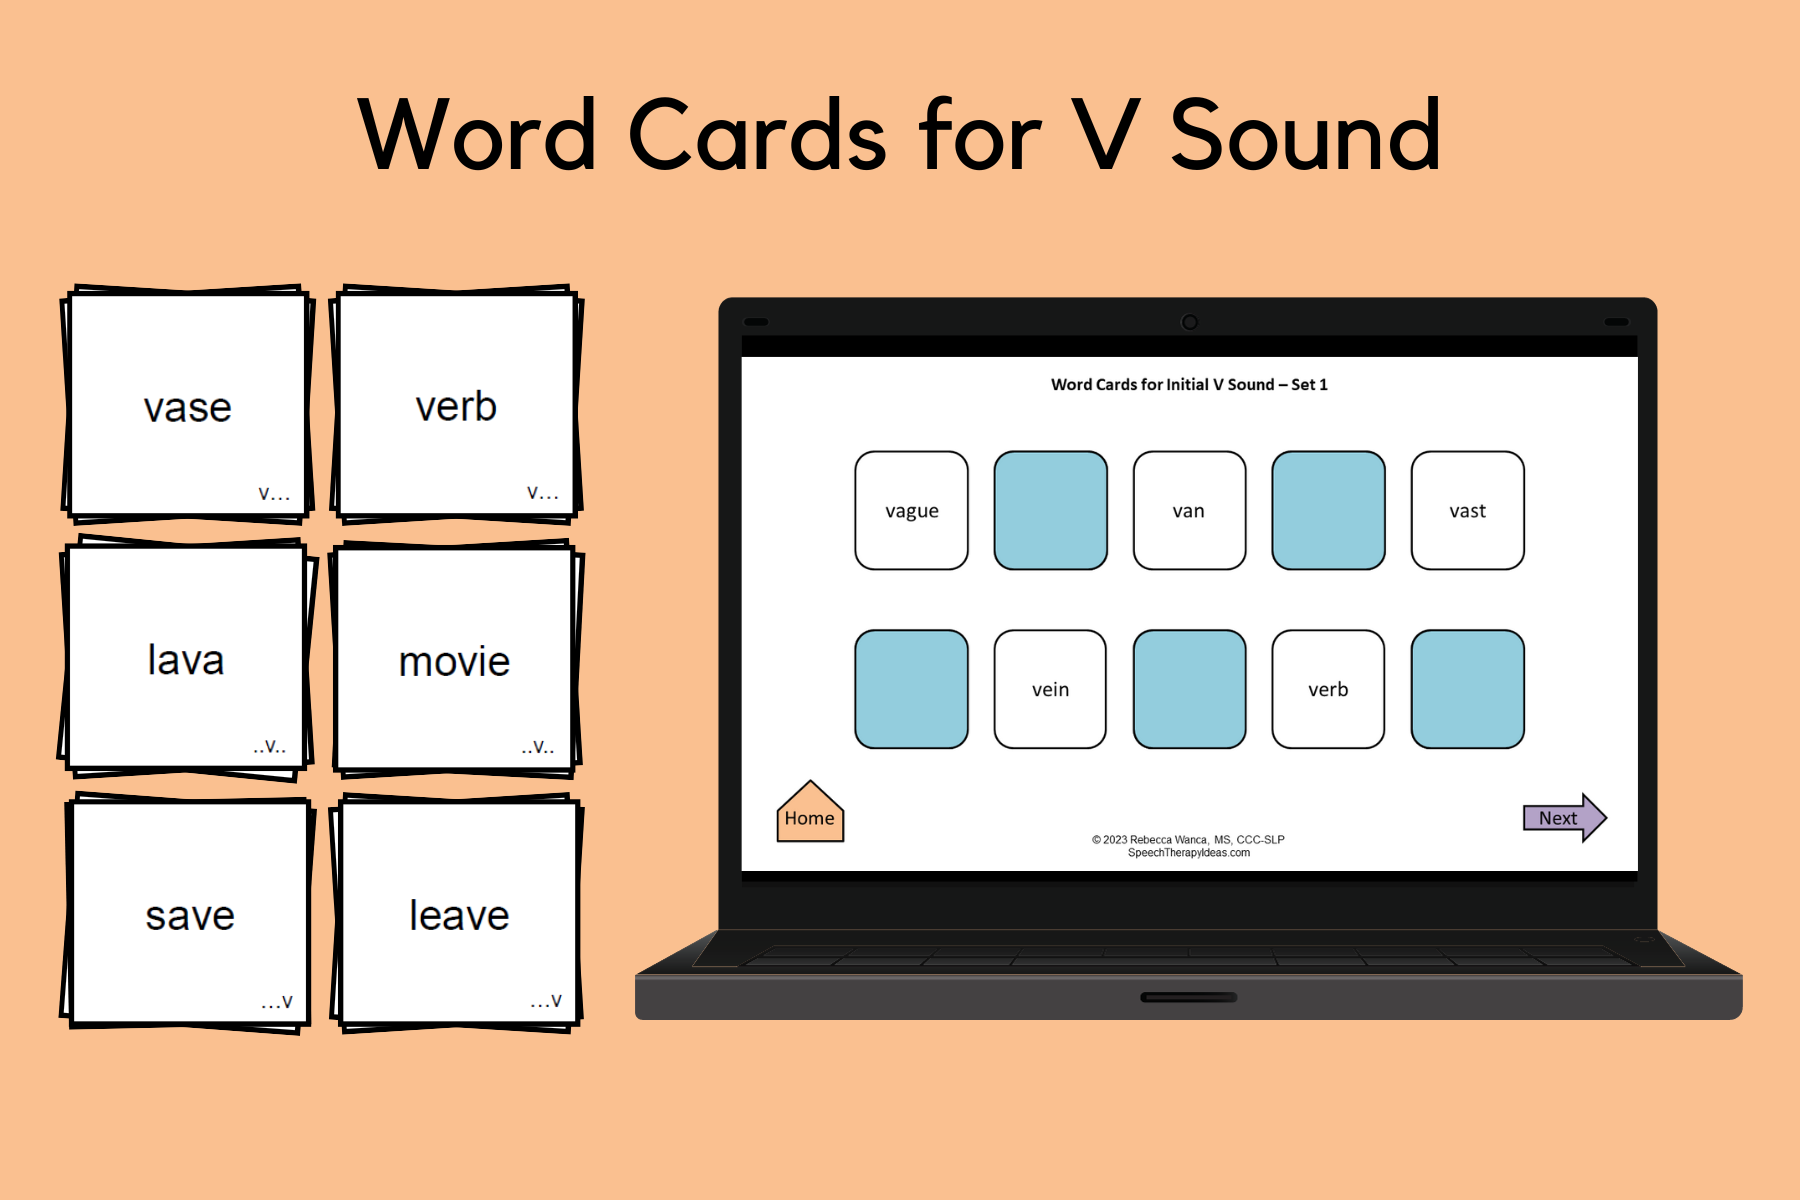 Word Cards for V Sound